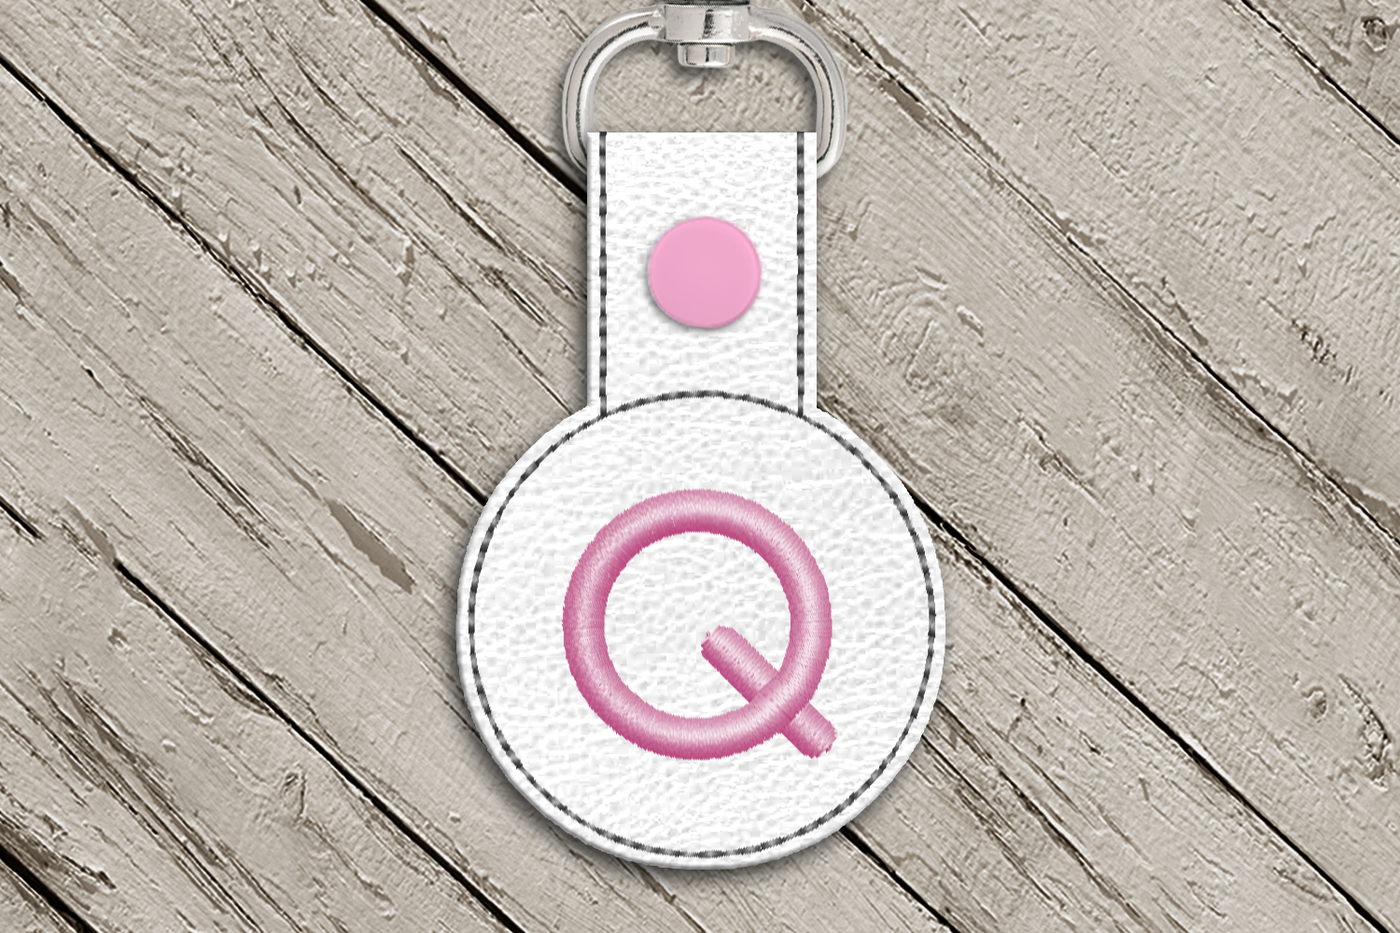 Letter Q in the hoop key fob design